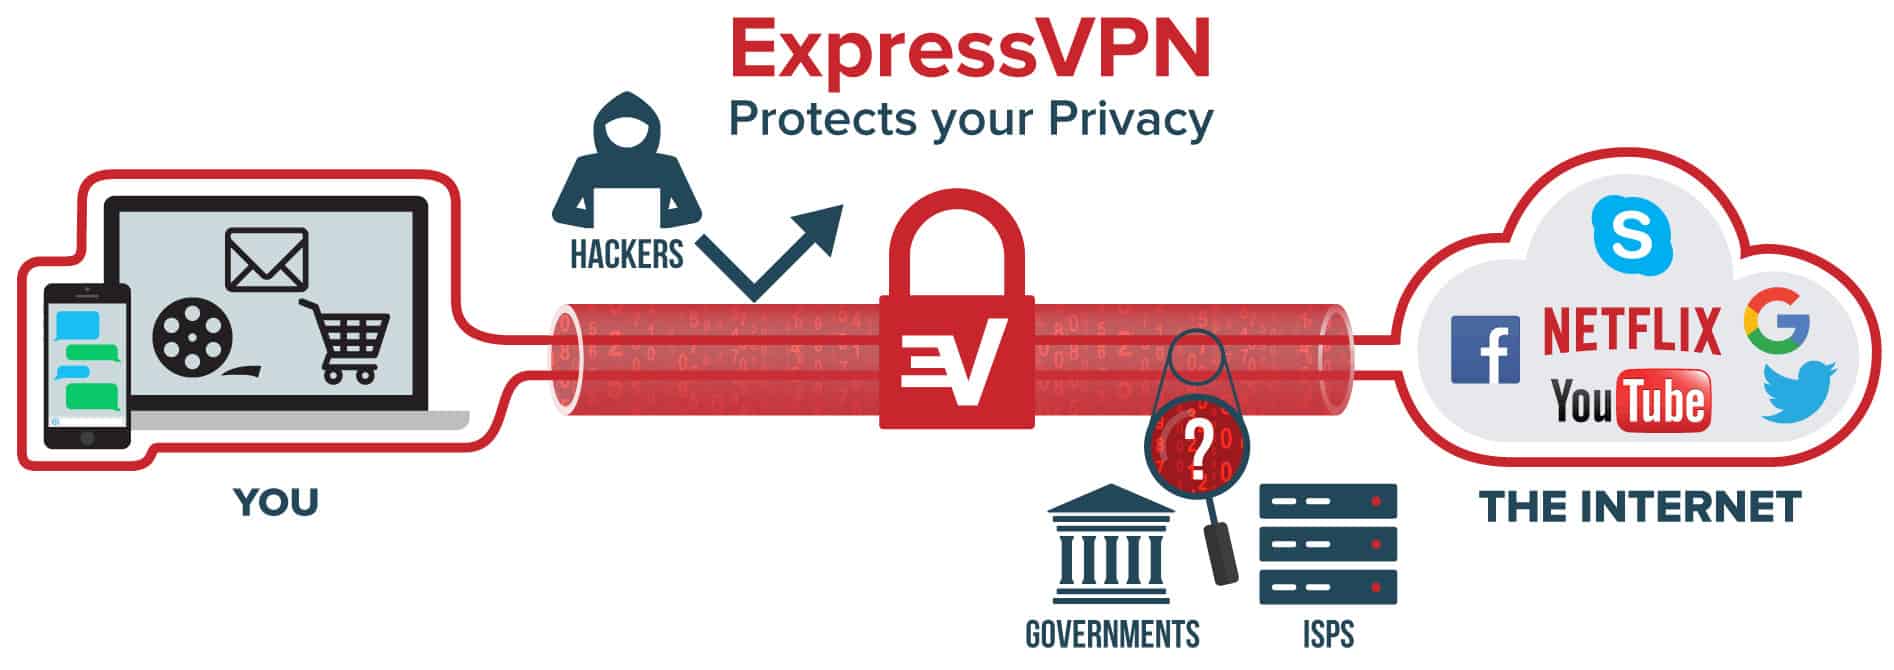 VPN expresVPN